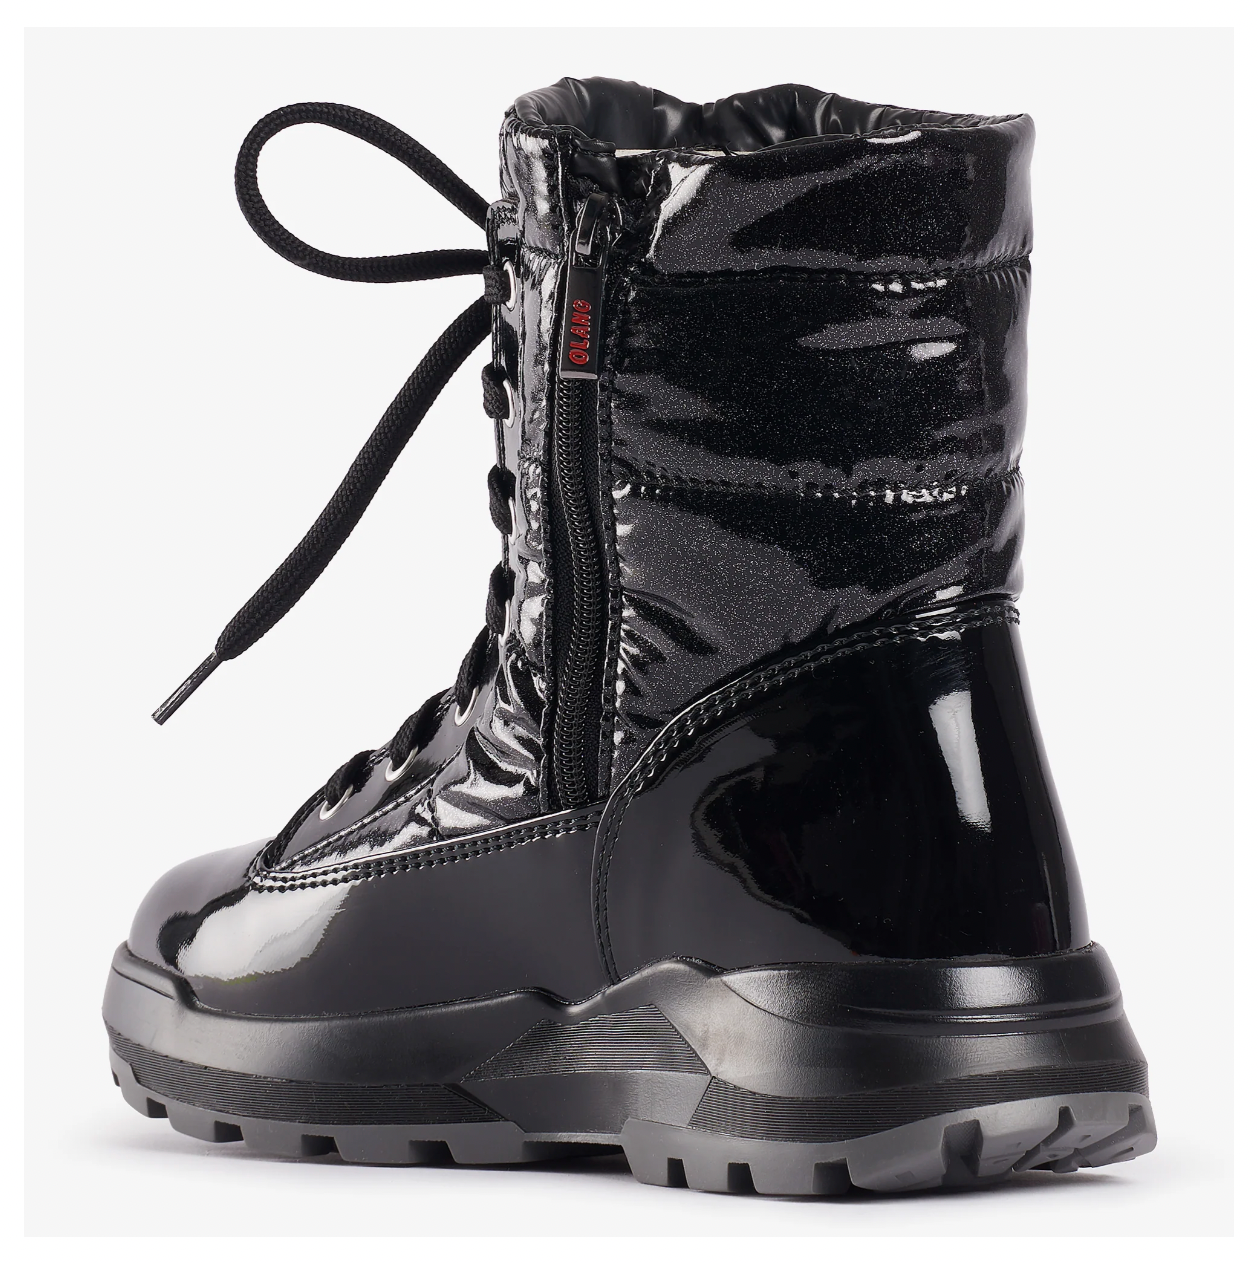 Olang "Aidan" 2.0 Ice black Winter boot -30 w/ice cleats